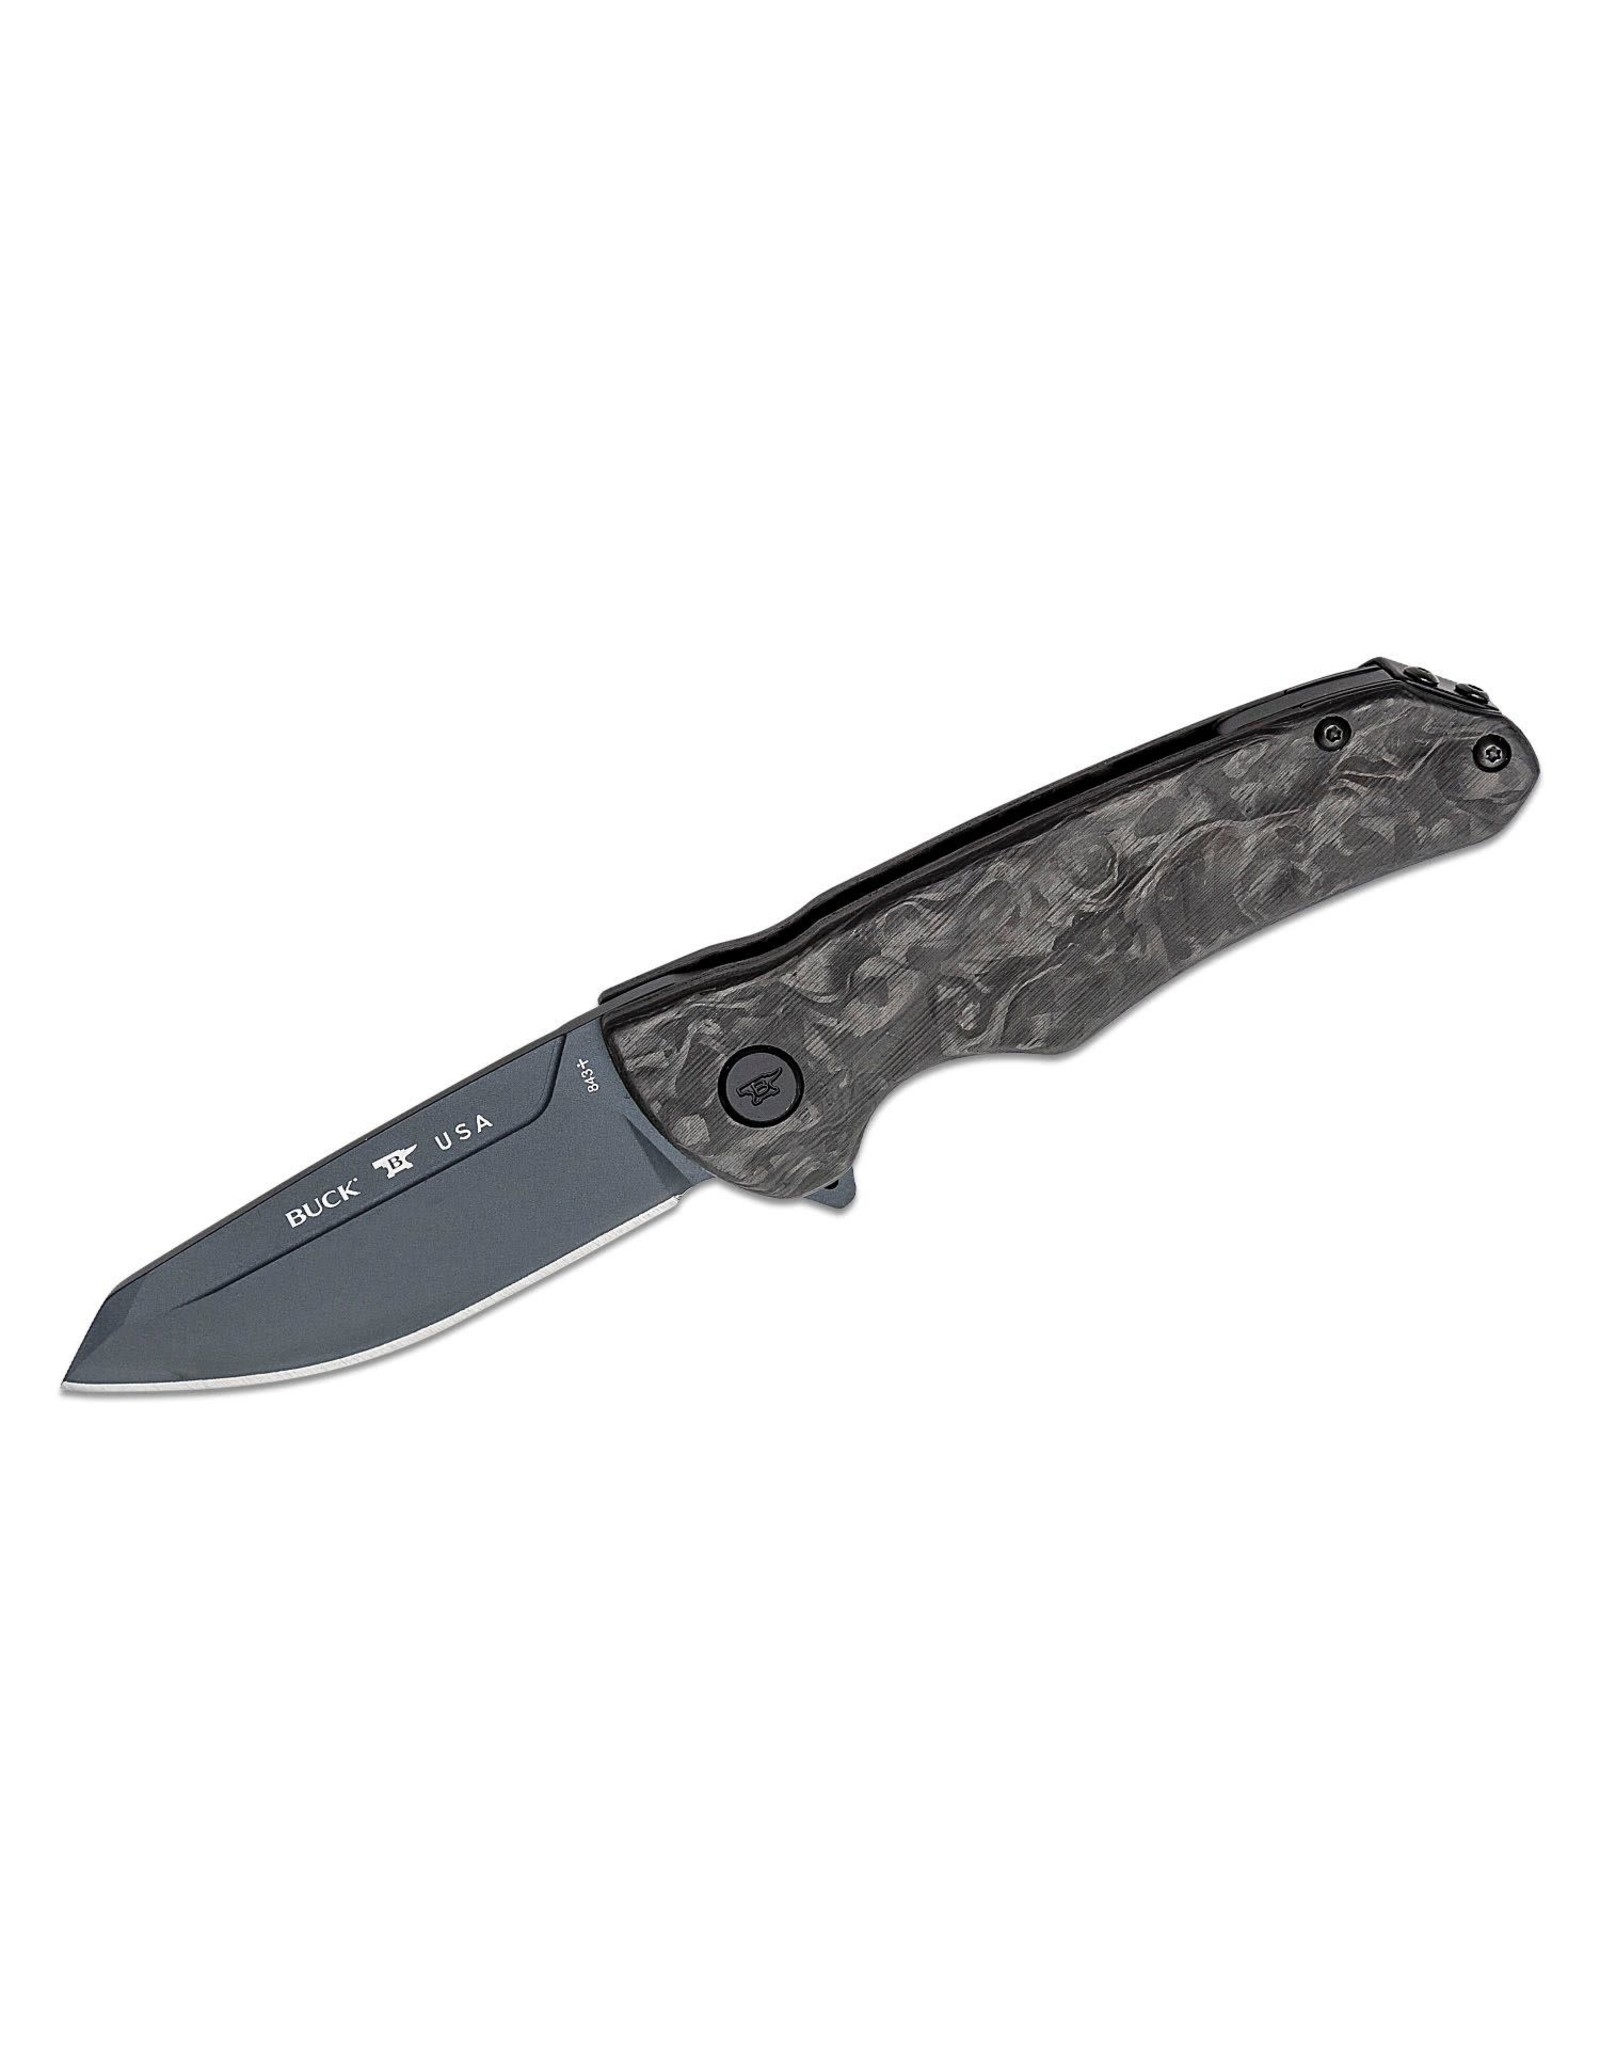 Buck Knives Buck 843 Sprint Ops Flipper Knife 3.125" CPM-S45VN Black Reverse Tanto, Marbled Carbon Fiber Handles - 13439